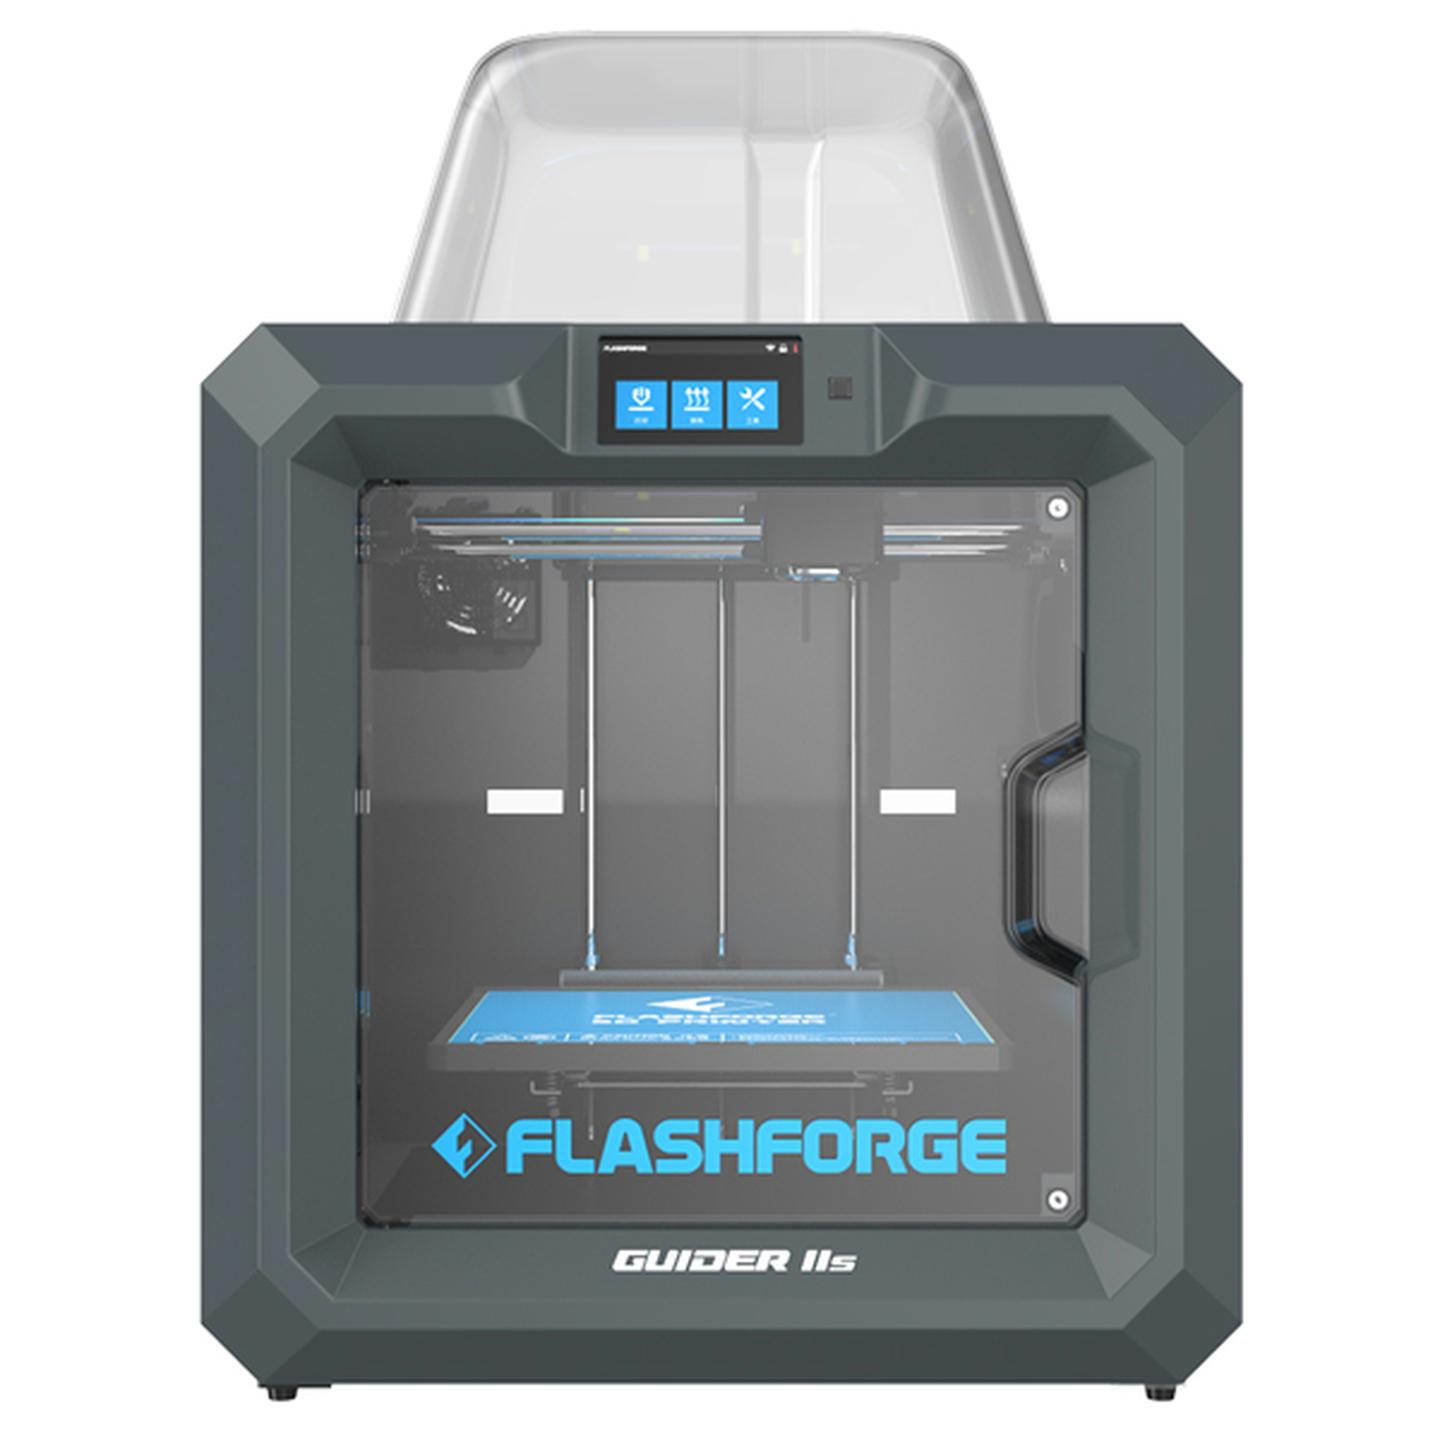 Flashforge Guider IIS Extra Large 3D Printer